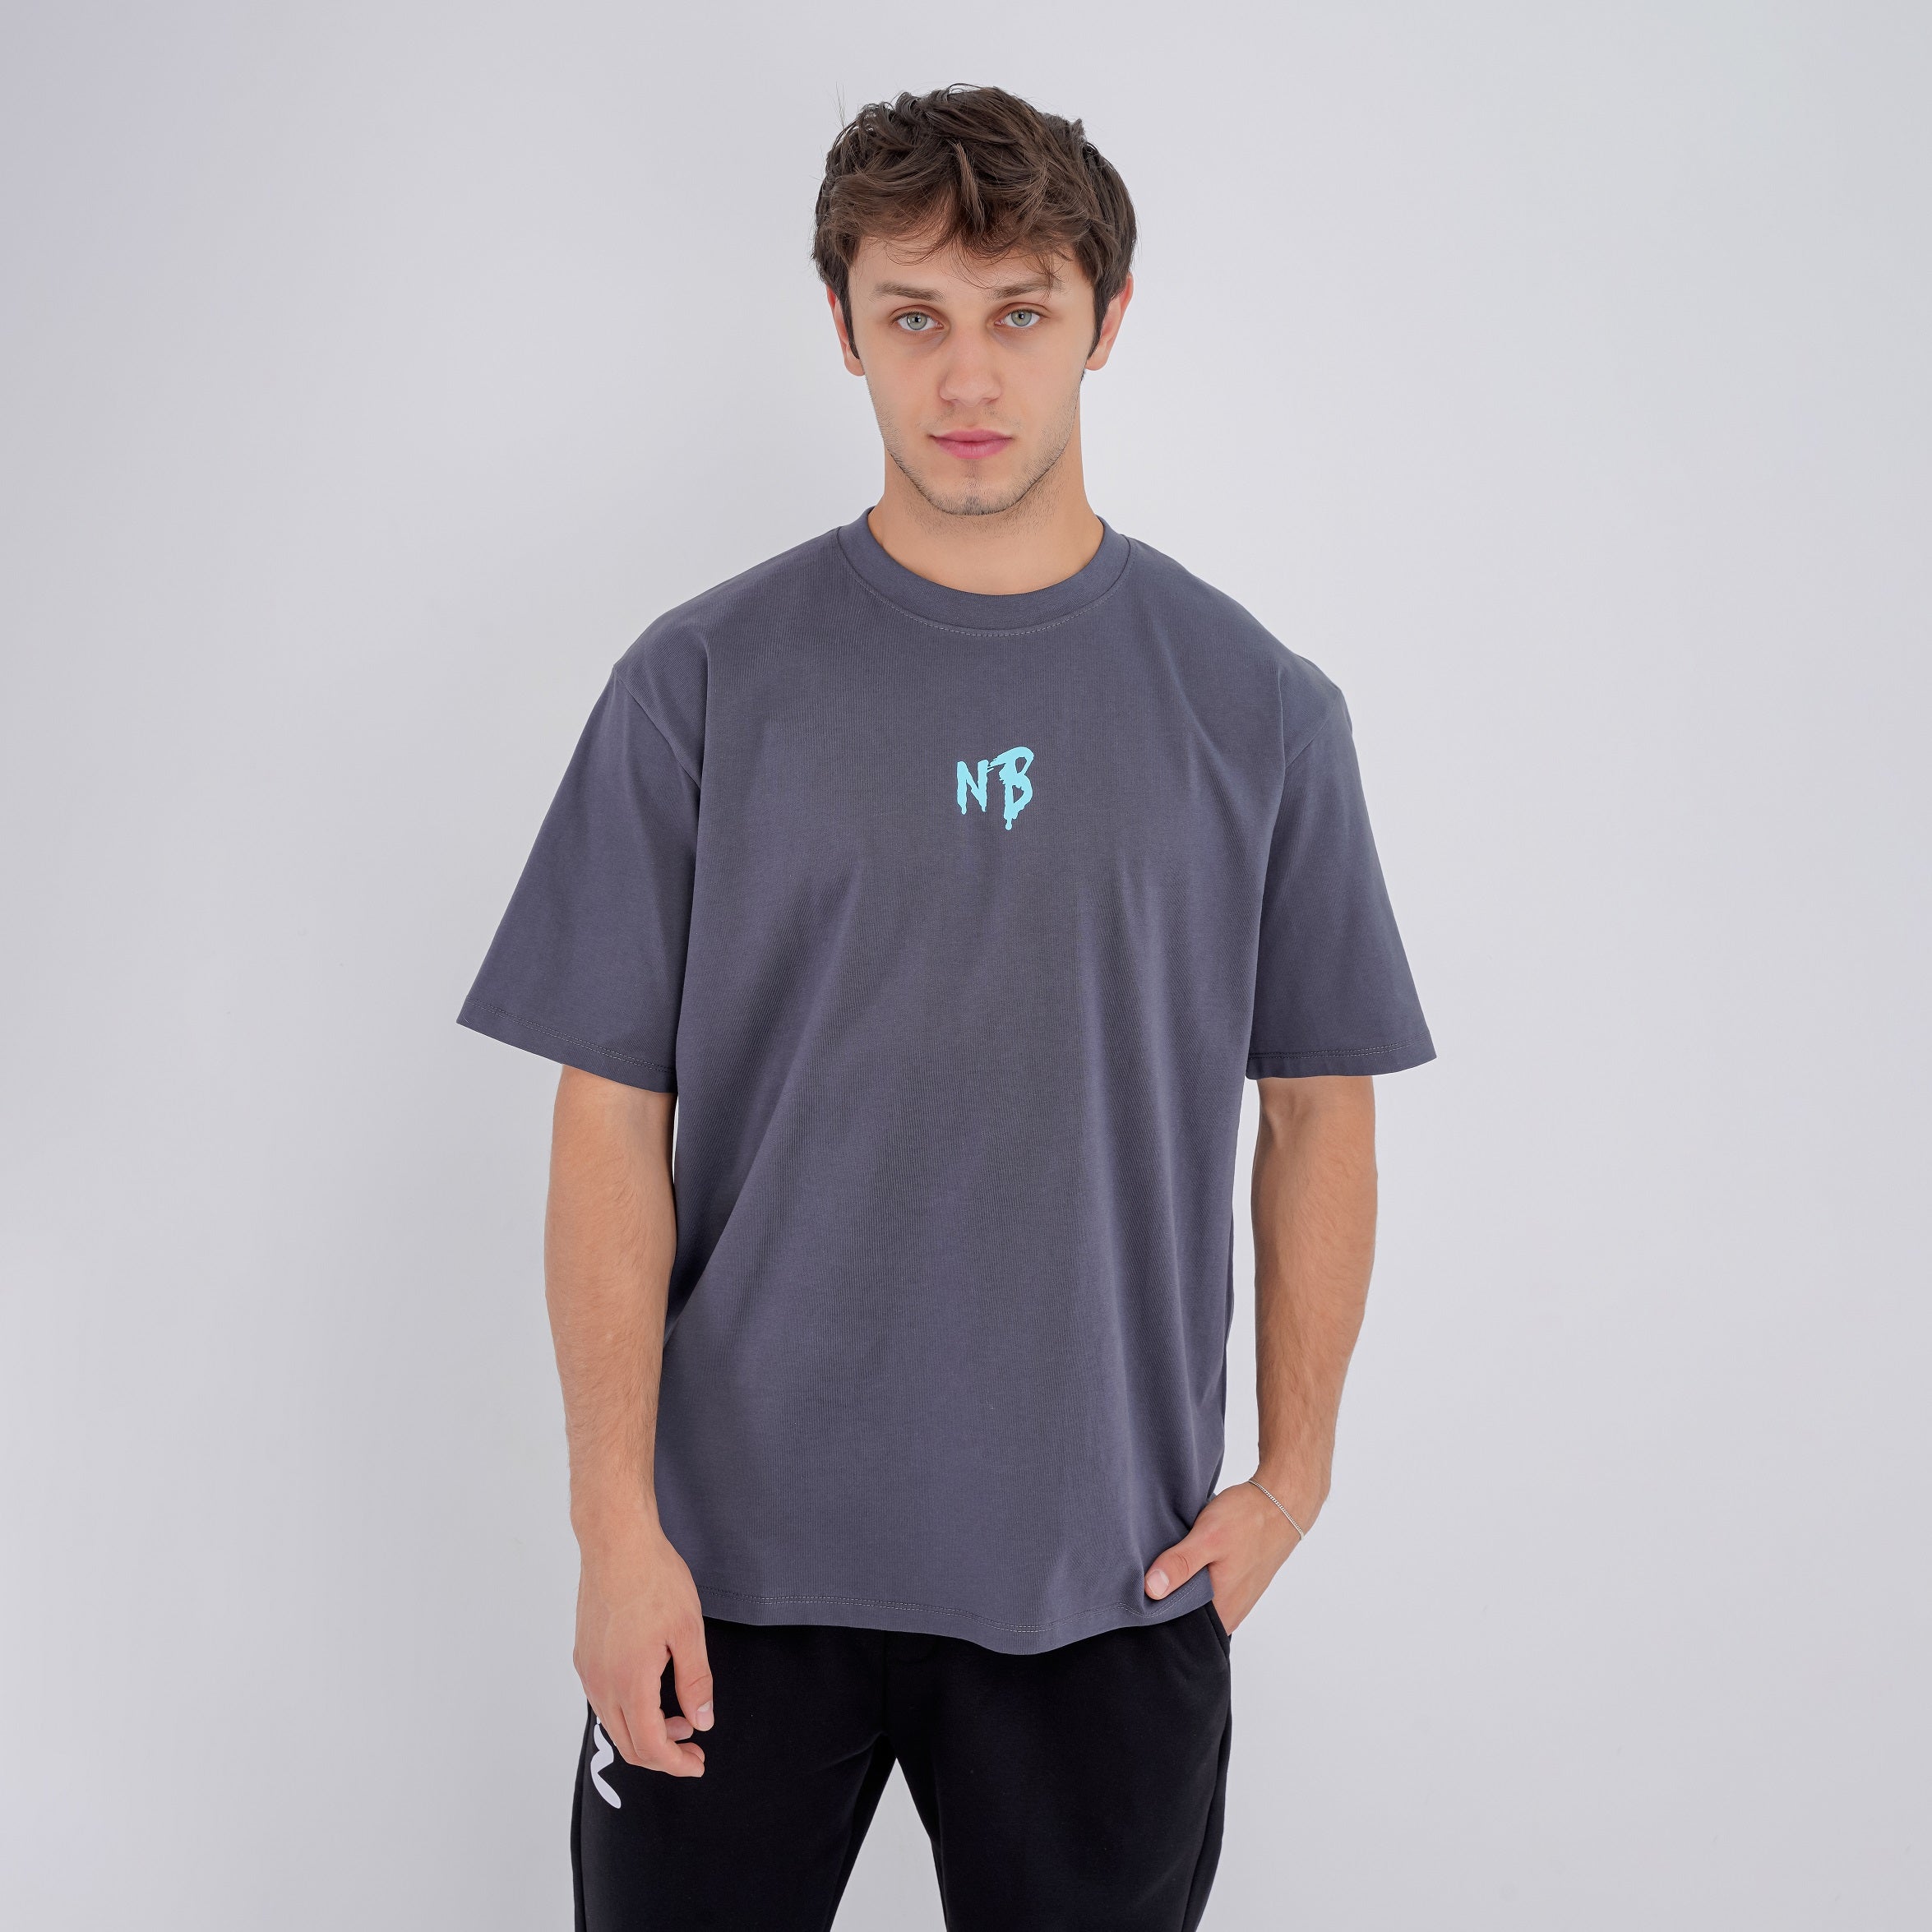 M24TH827 - Oversized Round neck, Printed T-shirt